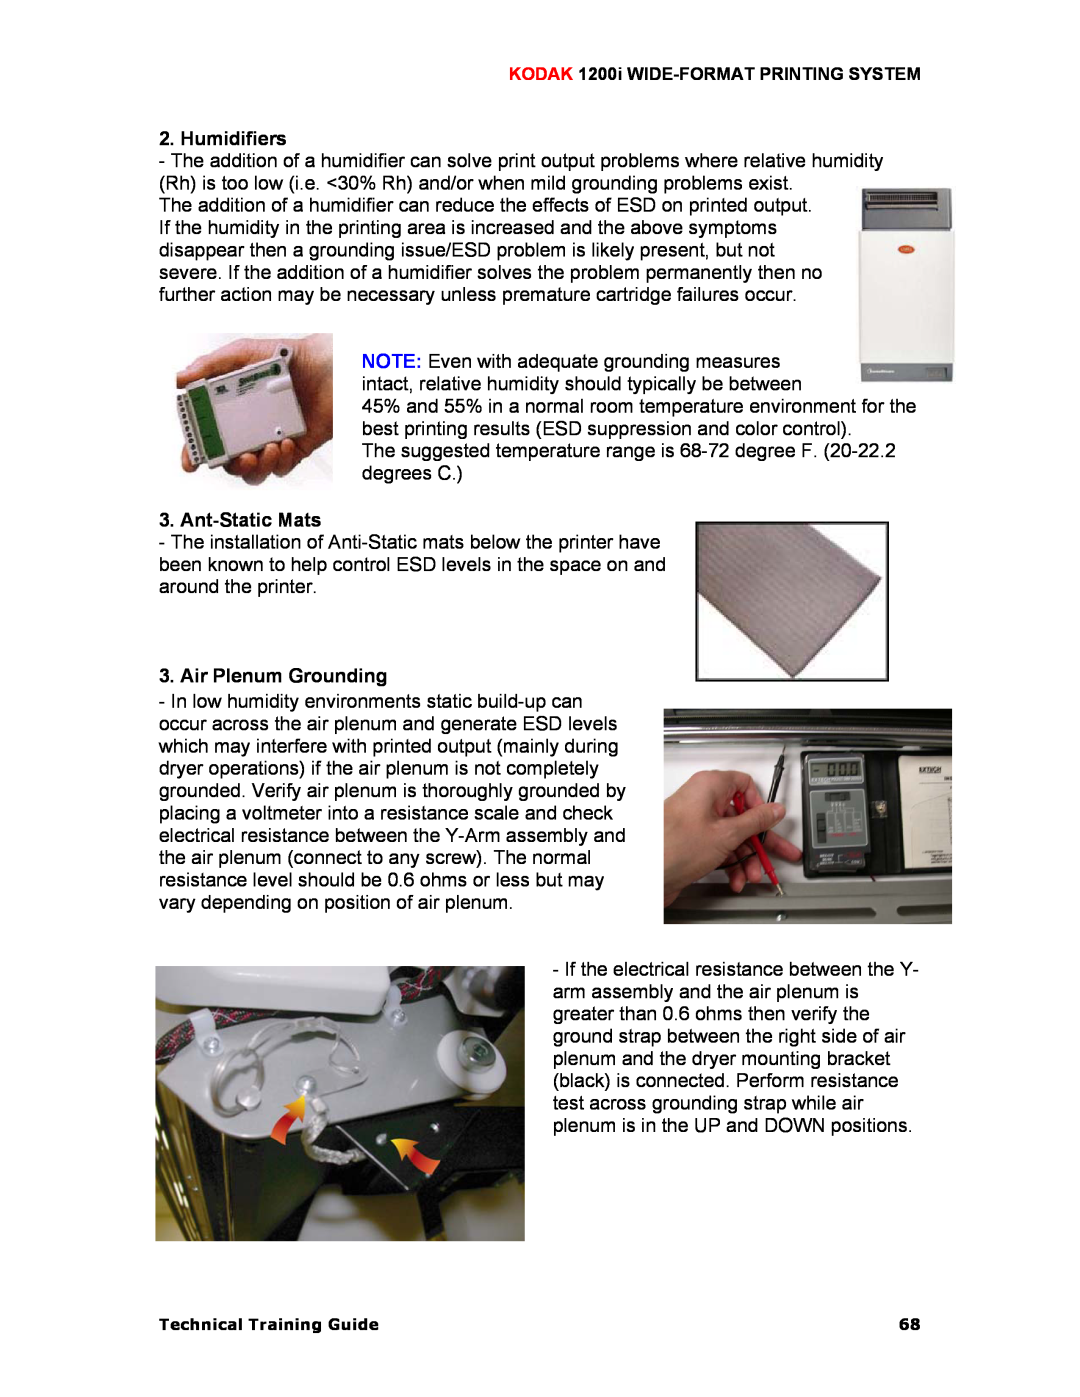 Kodak 1200I manual Humidifiers, Ant-StaticMats, Air Plenum Grounding, Technical Training Guide 